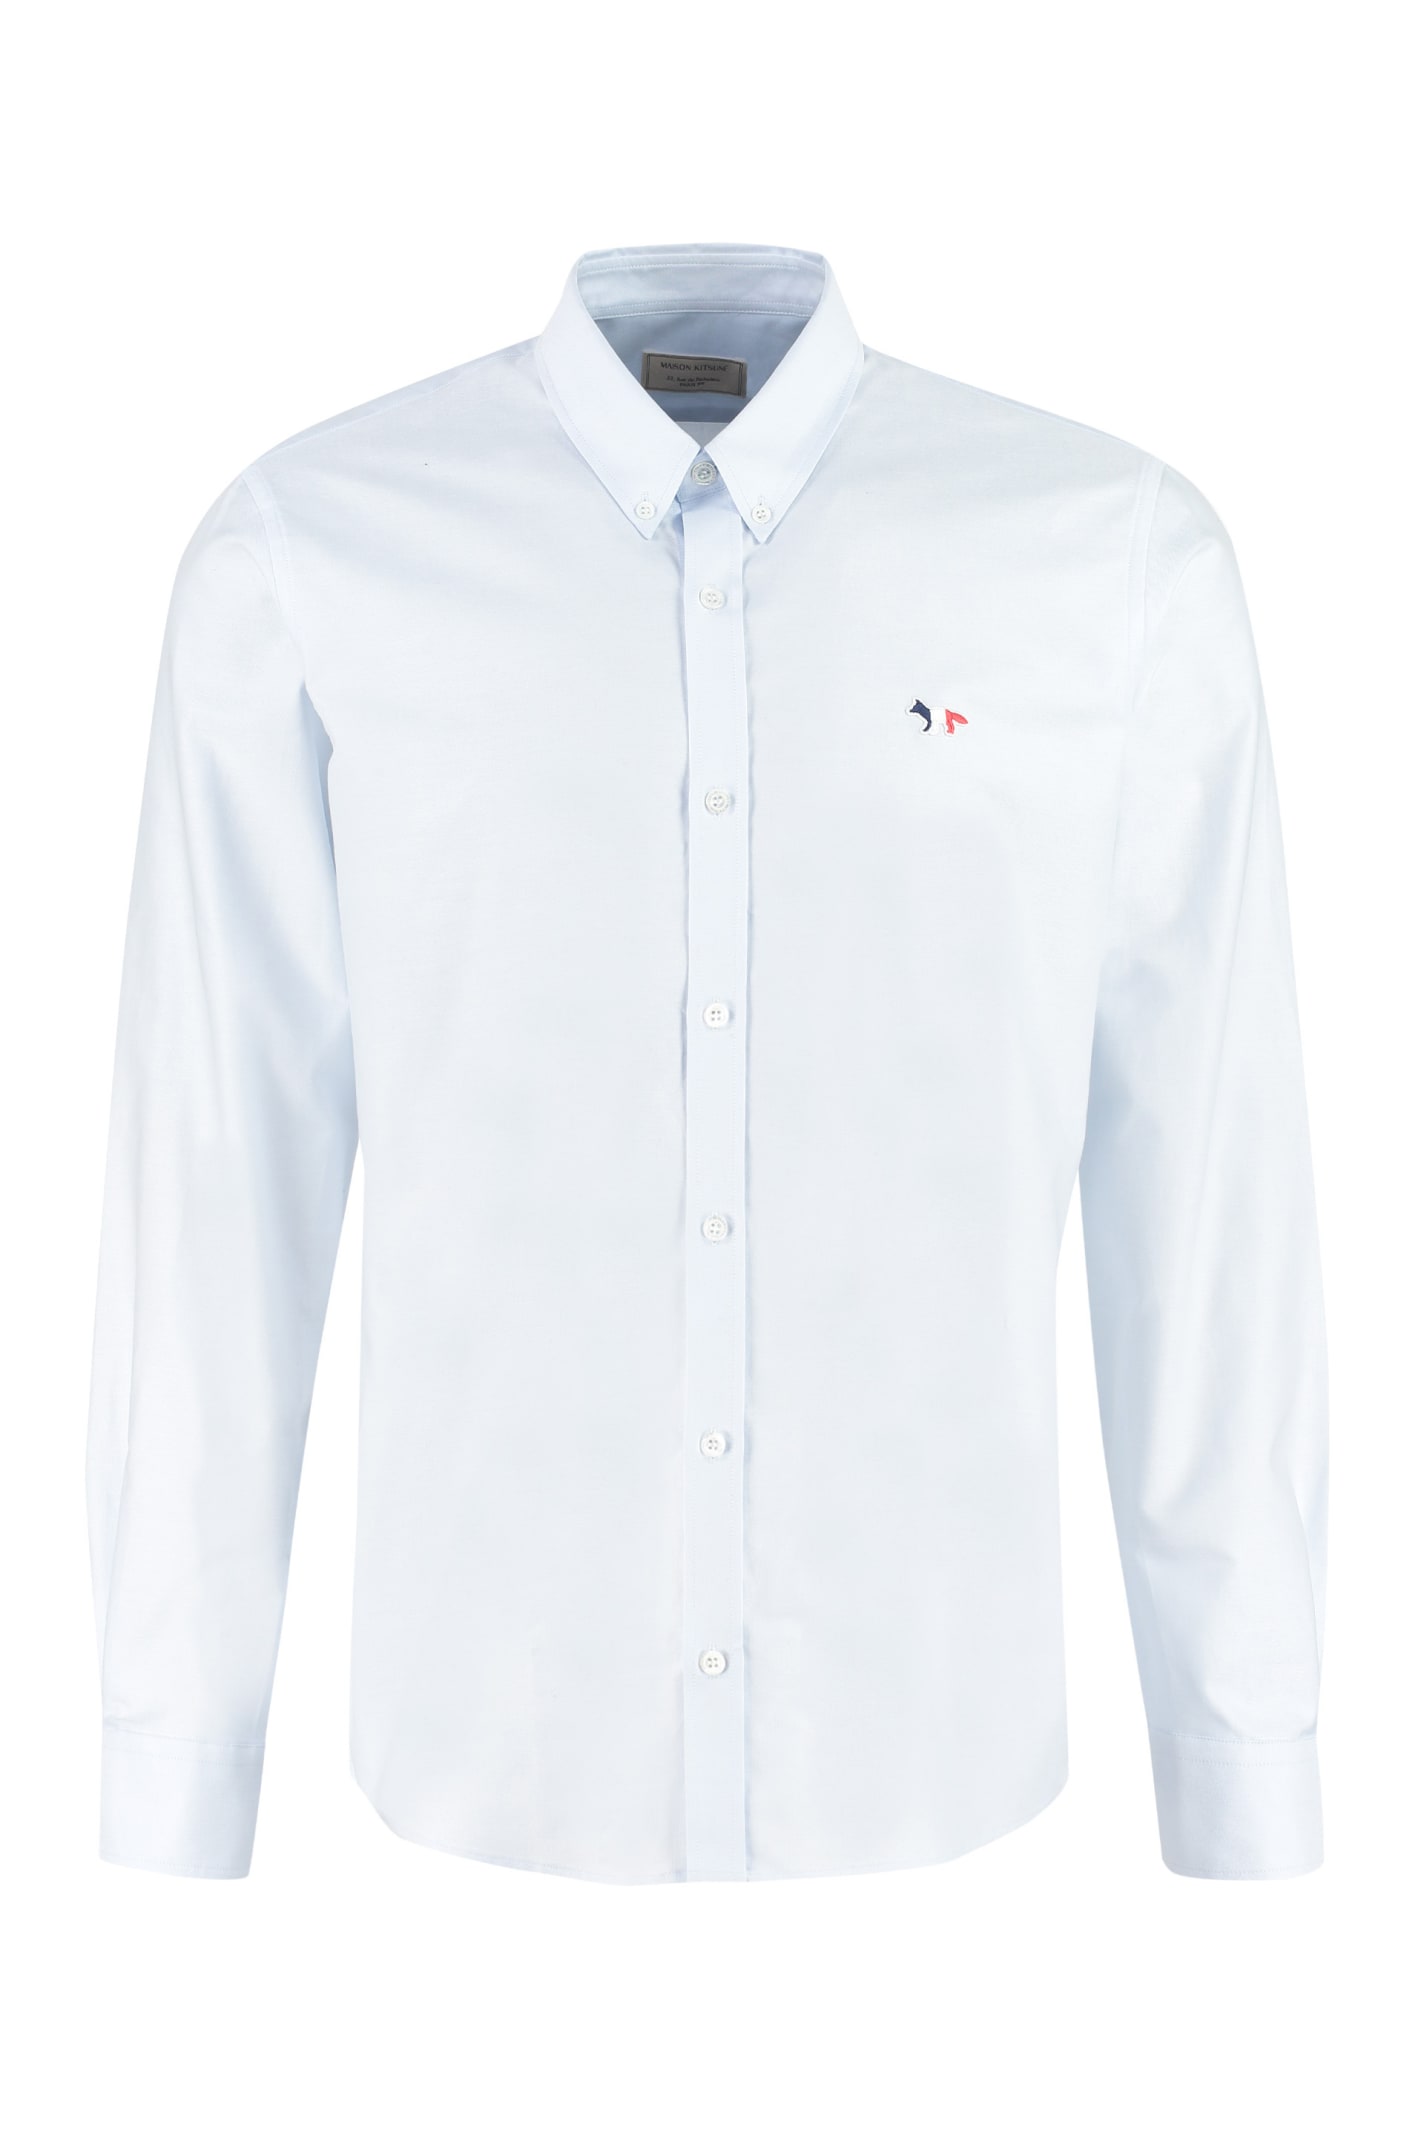 Maison Kitsuné Button-down Collar Cotton Shirt